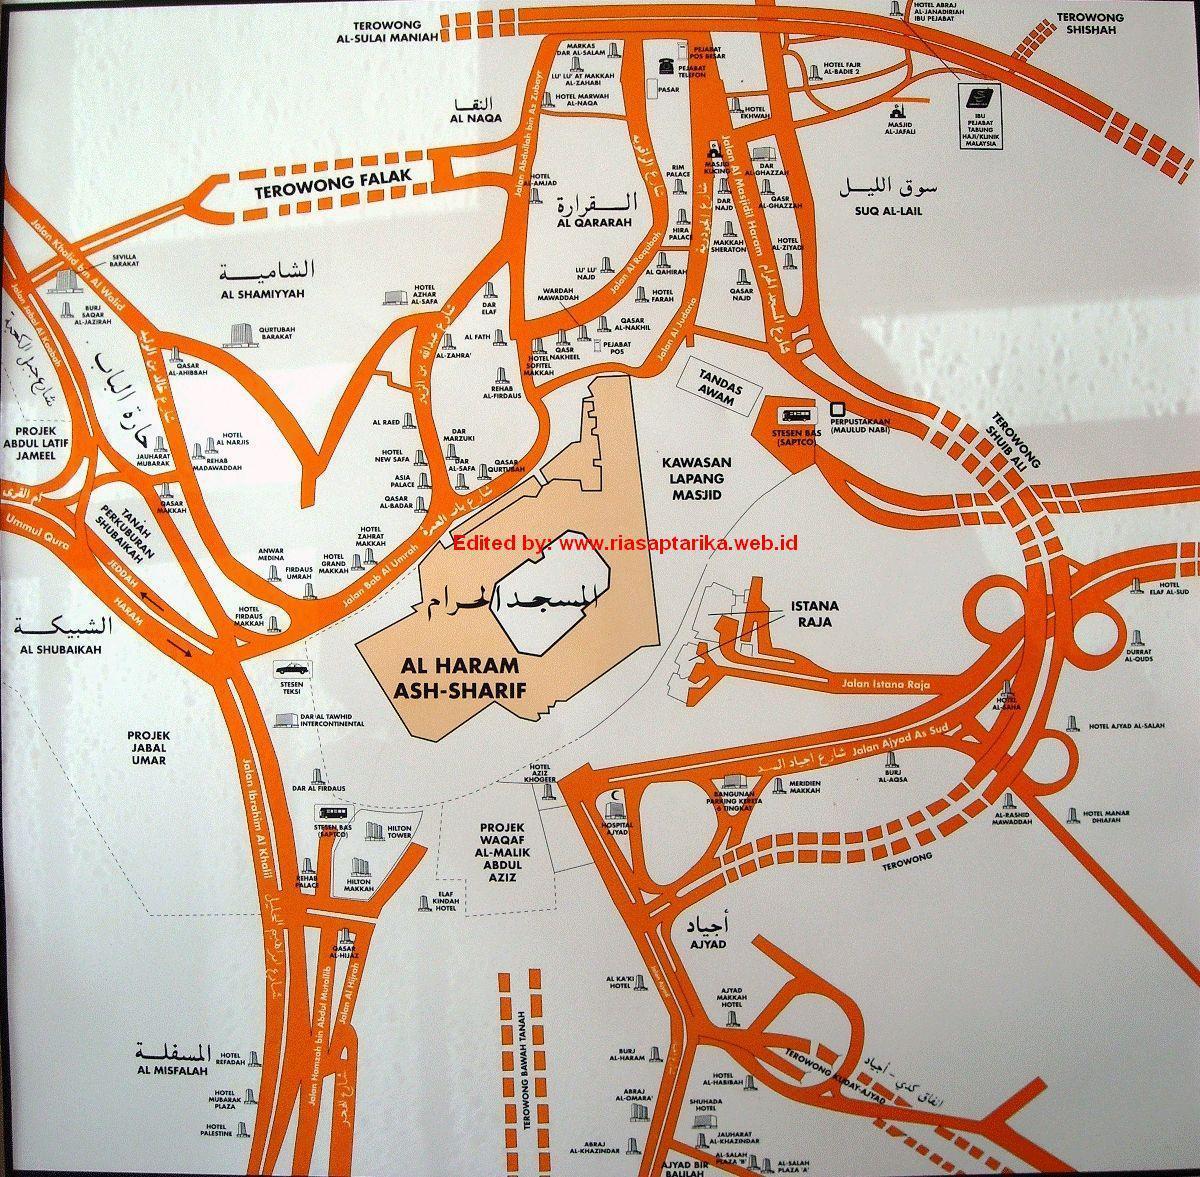 mapa de misfalah la Meca mapa